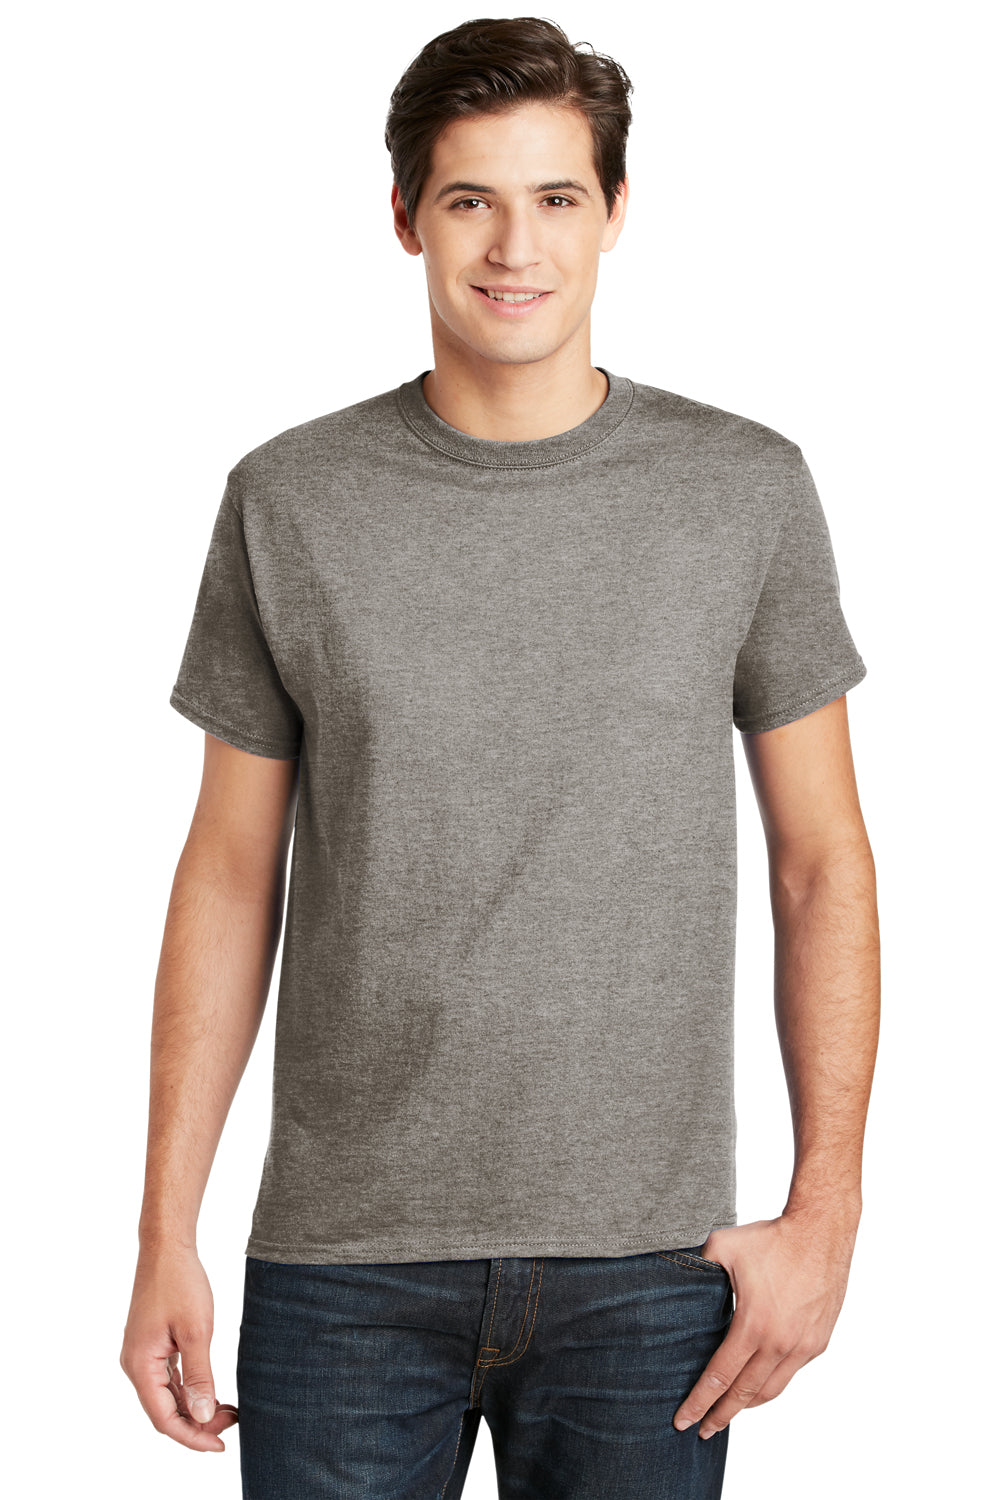 Hanes Mens ComfortSoft Short Sleeve Crewneck T-Shirt Oxford Gray Front